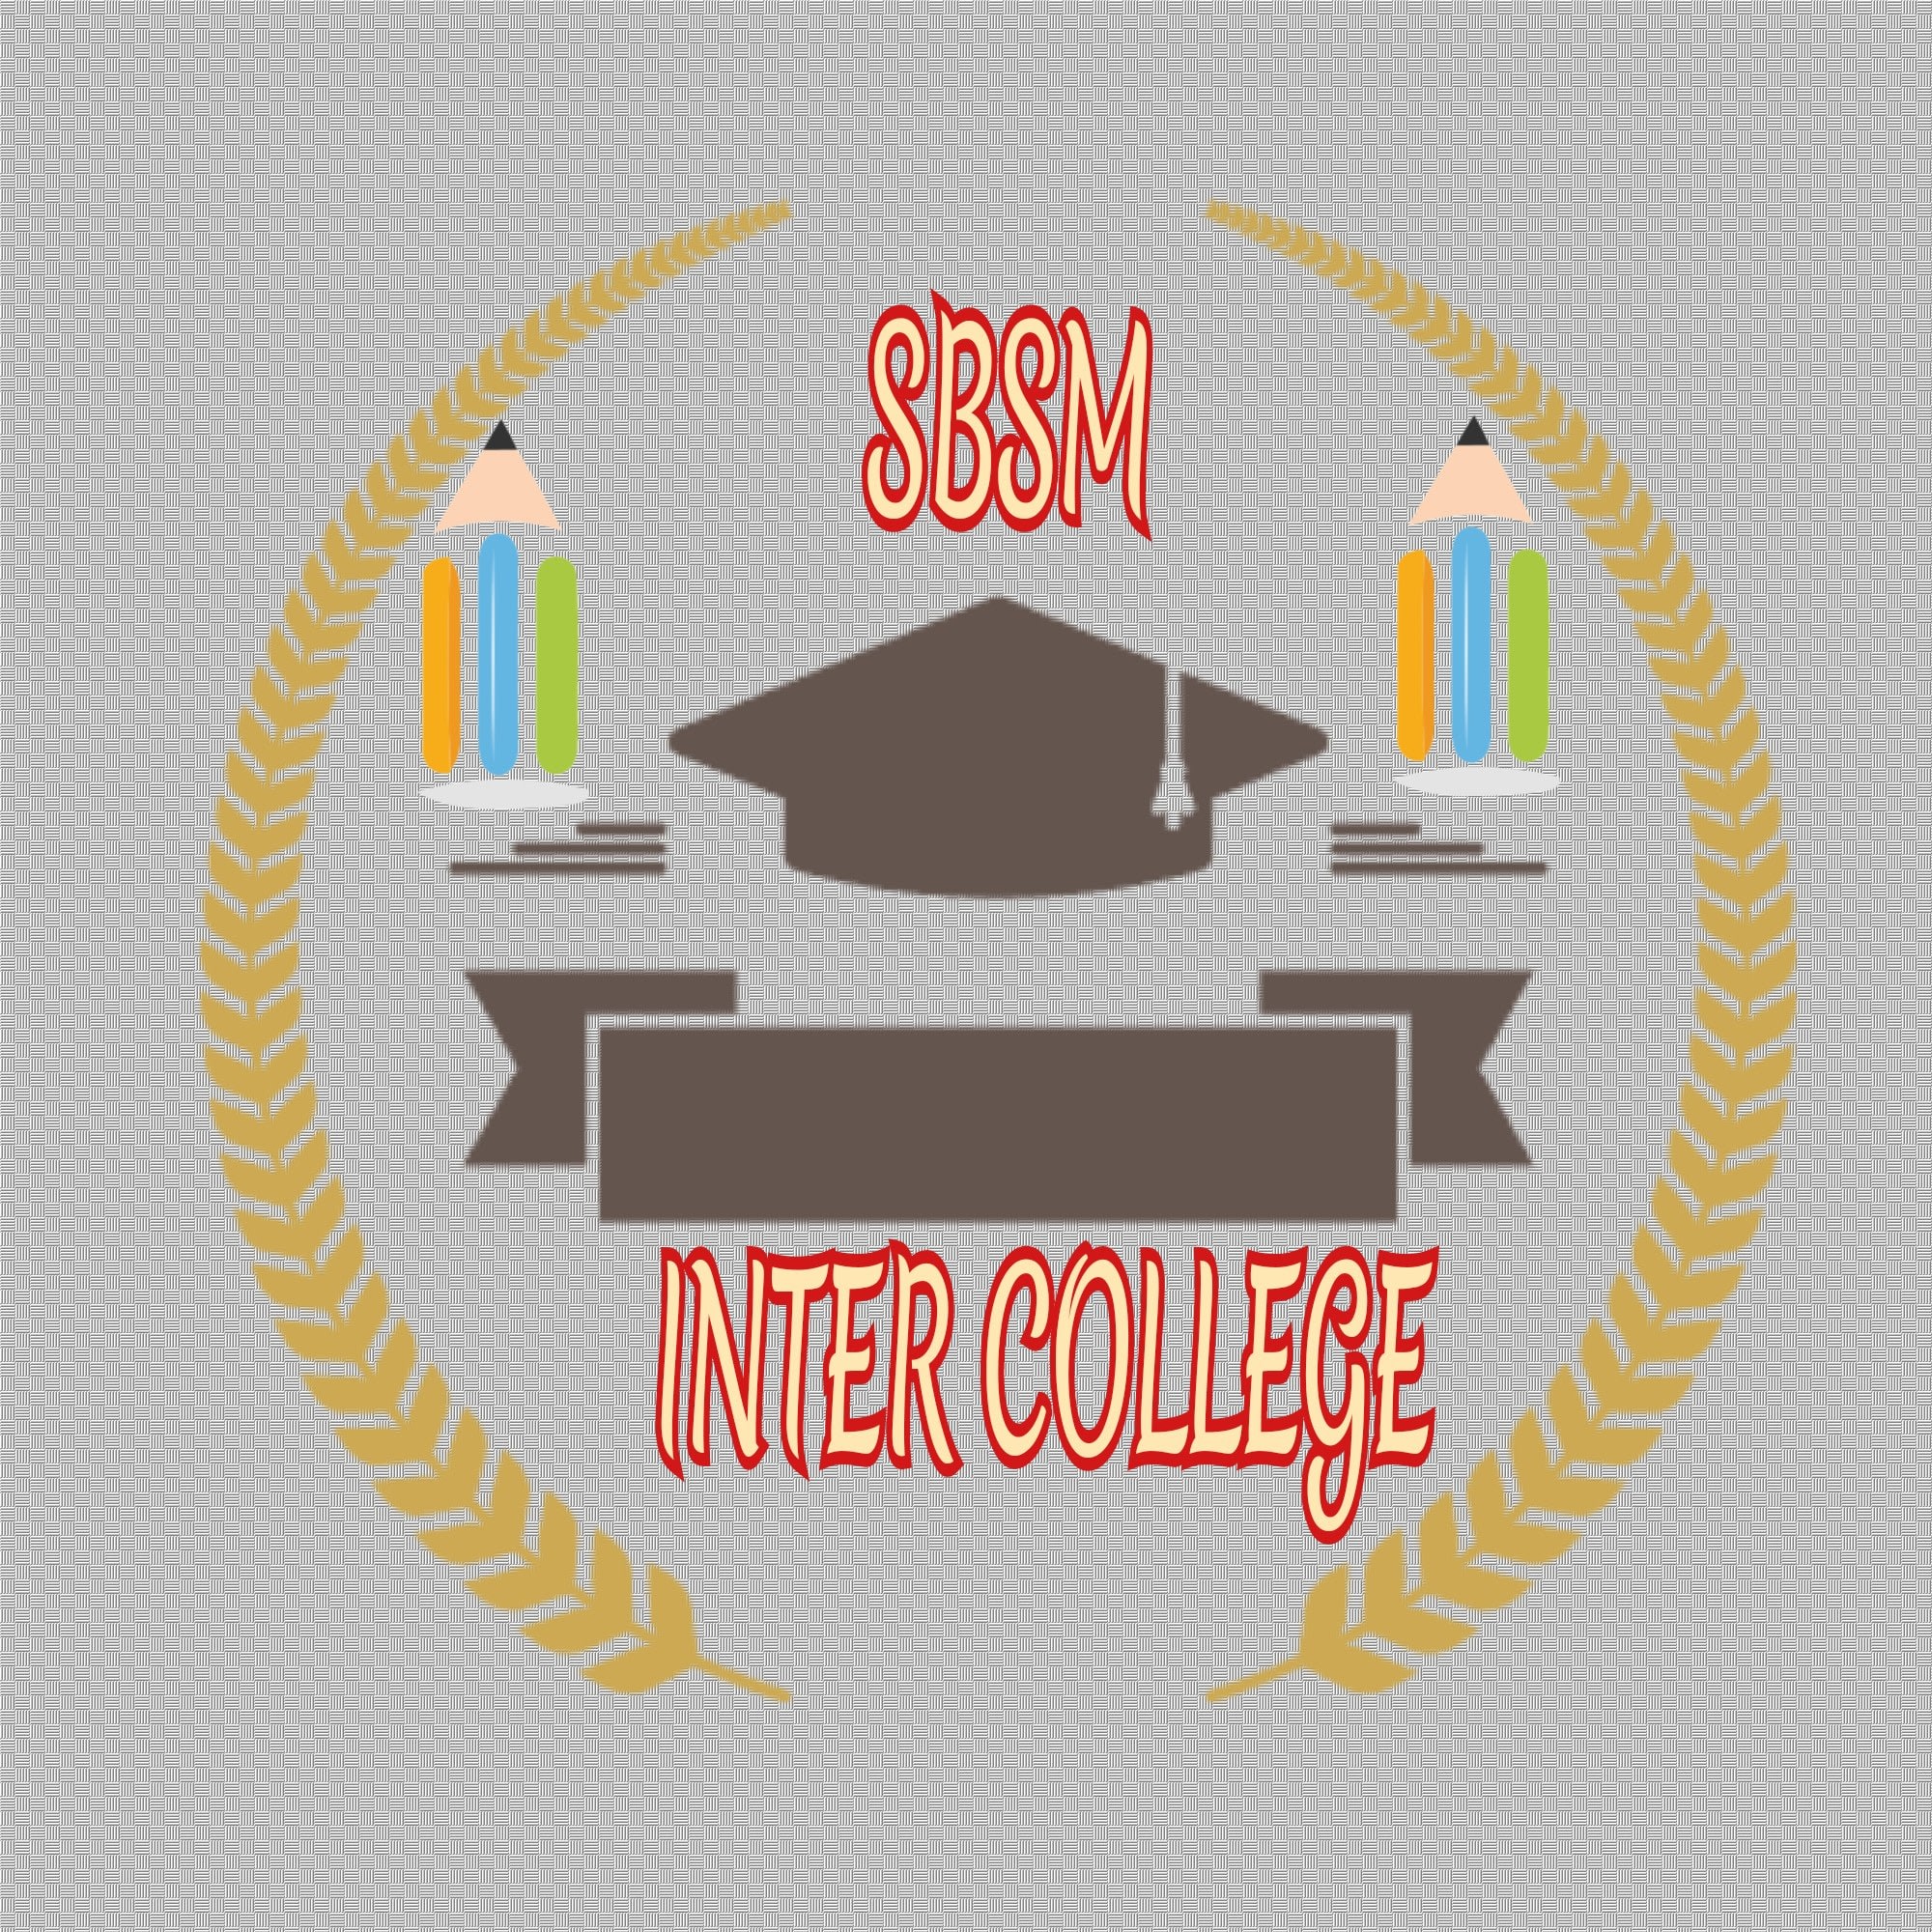 SBSM Inter College